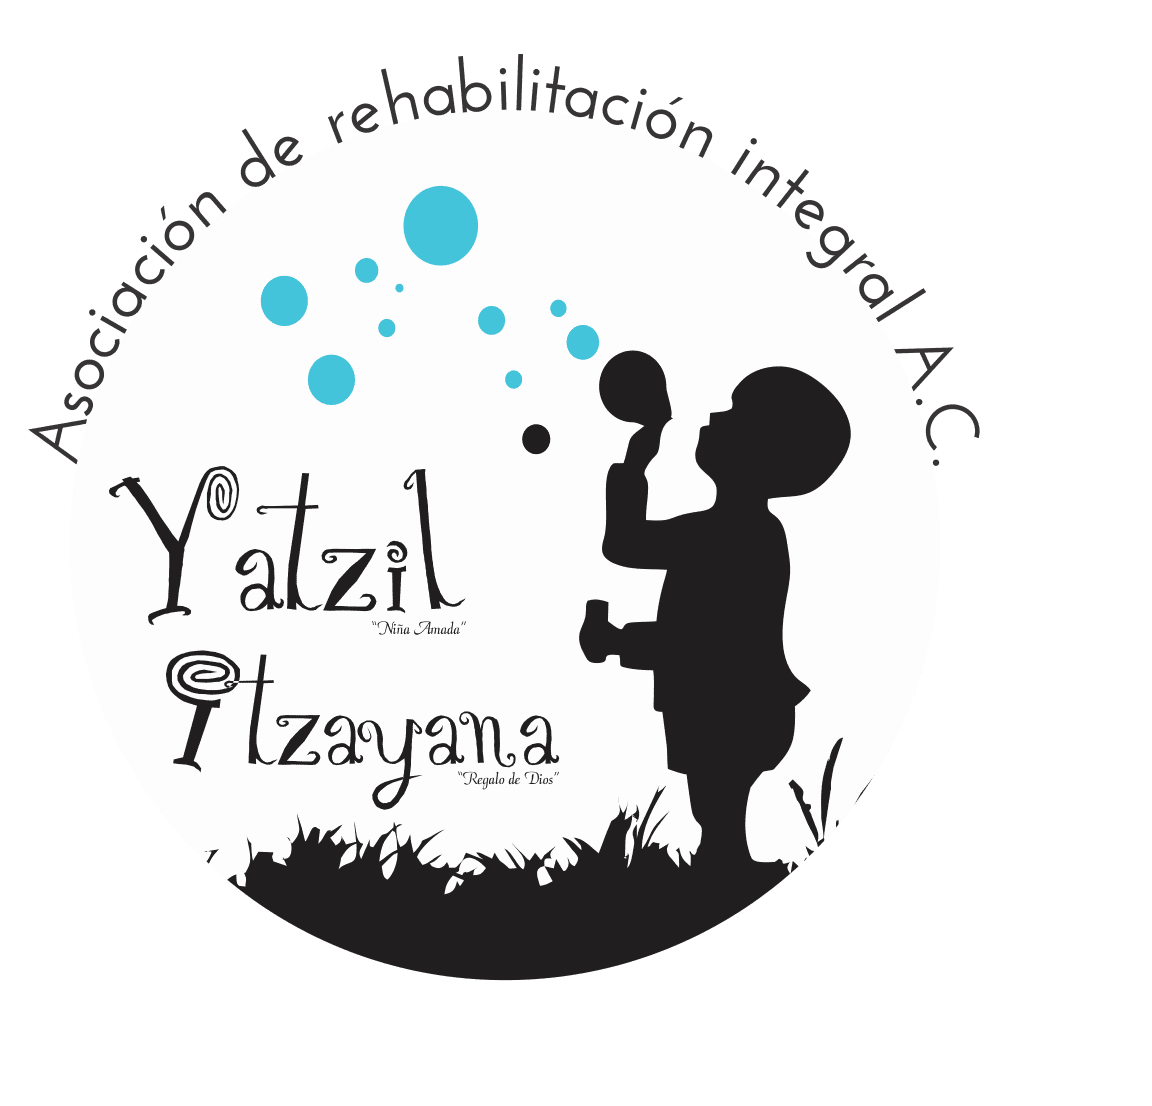 Yatzil Itzayana